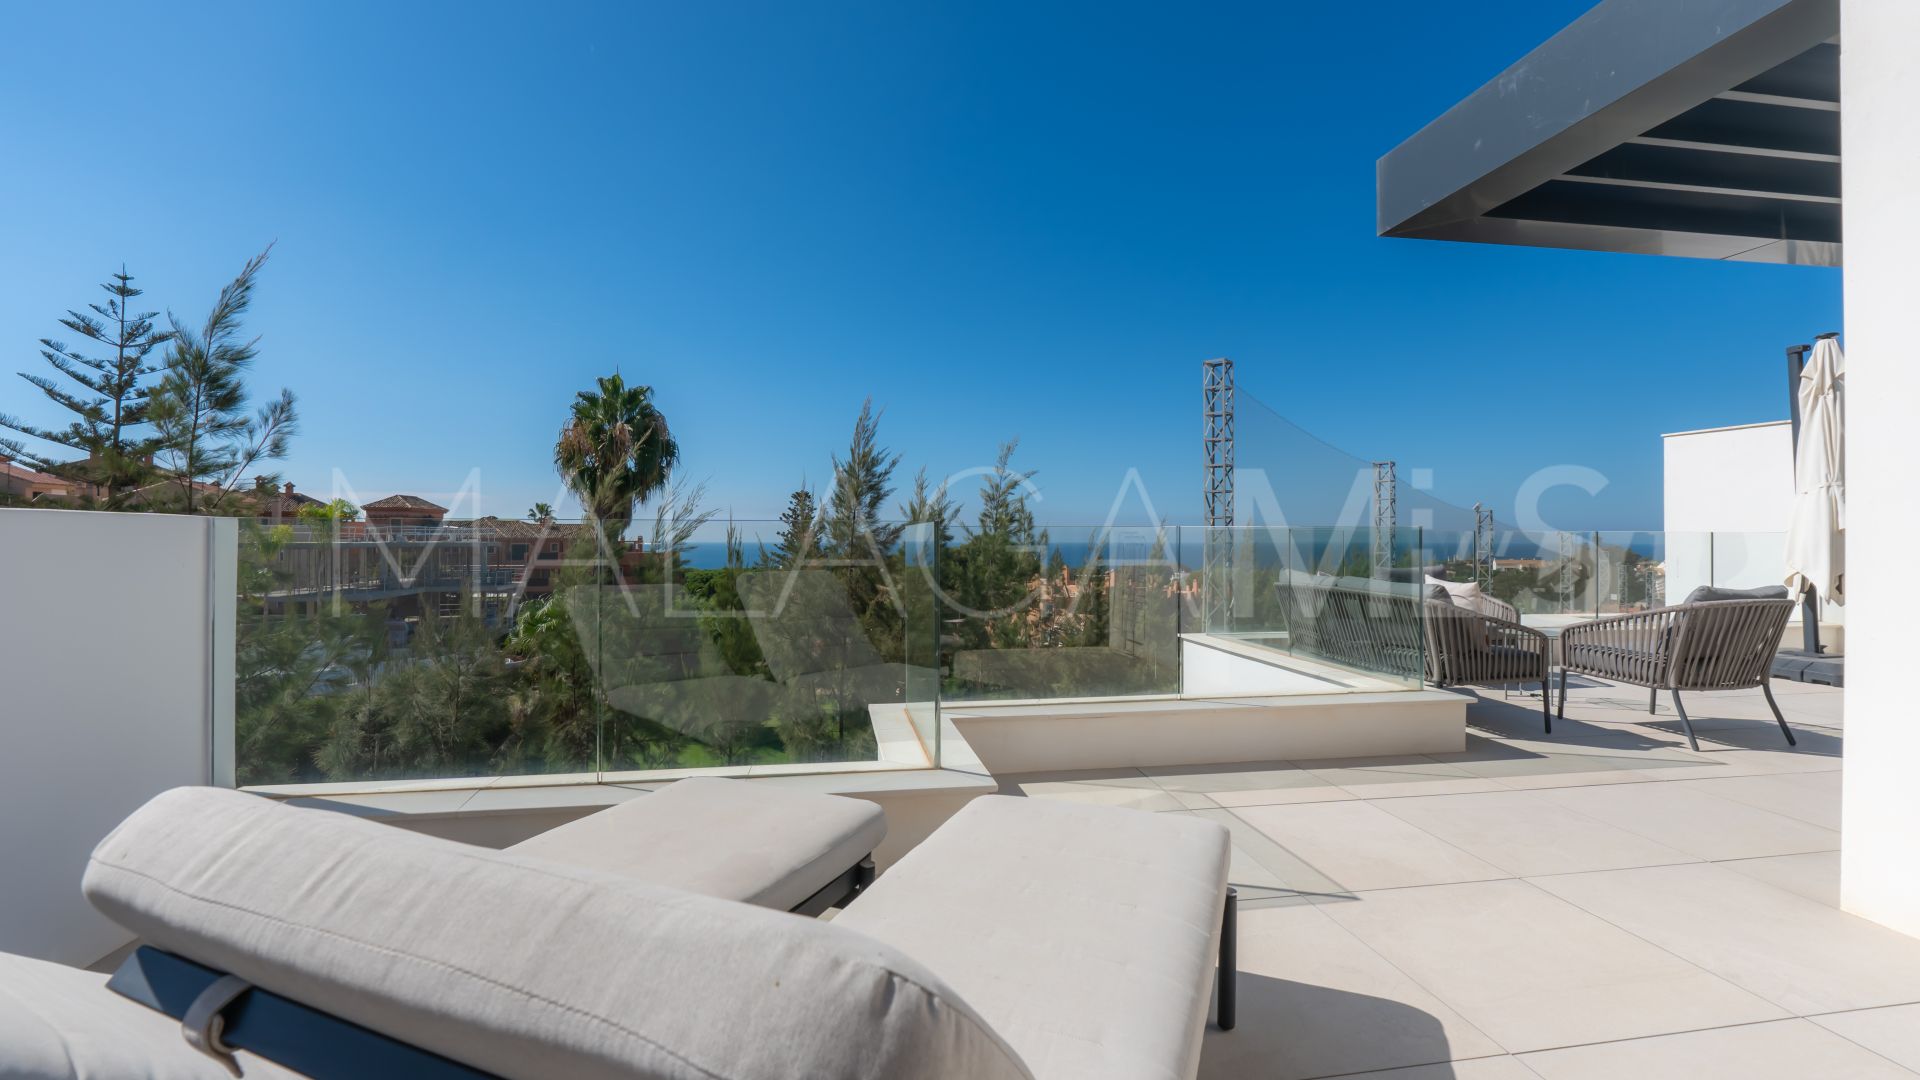 Marbella Este, atico for sale with 4 bedrooms